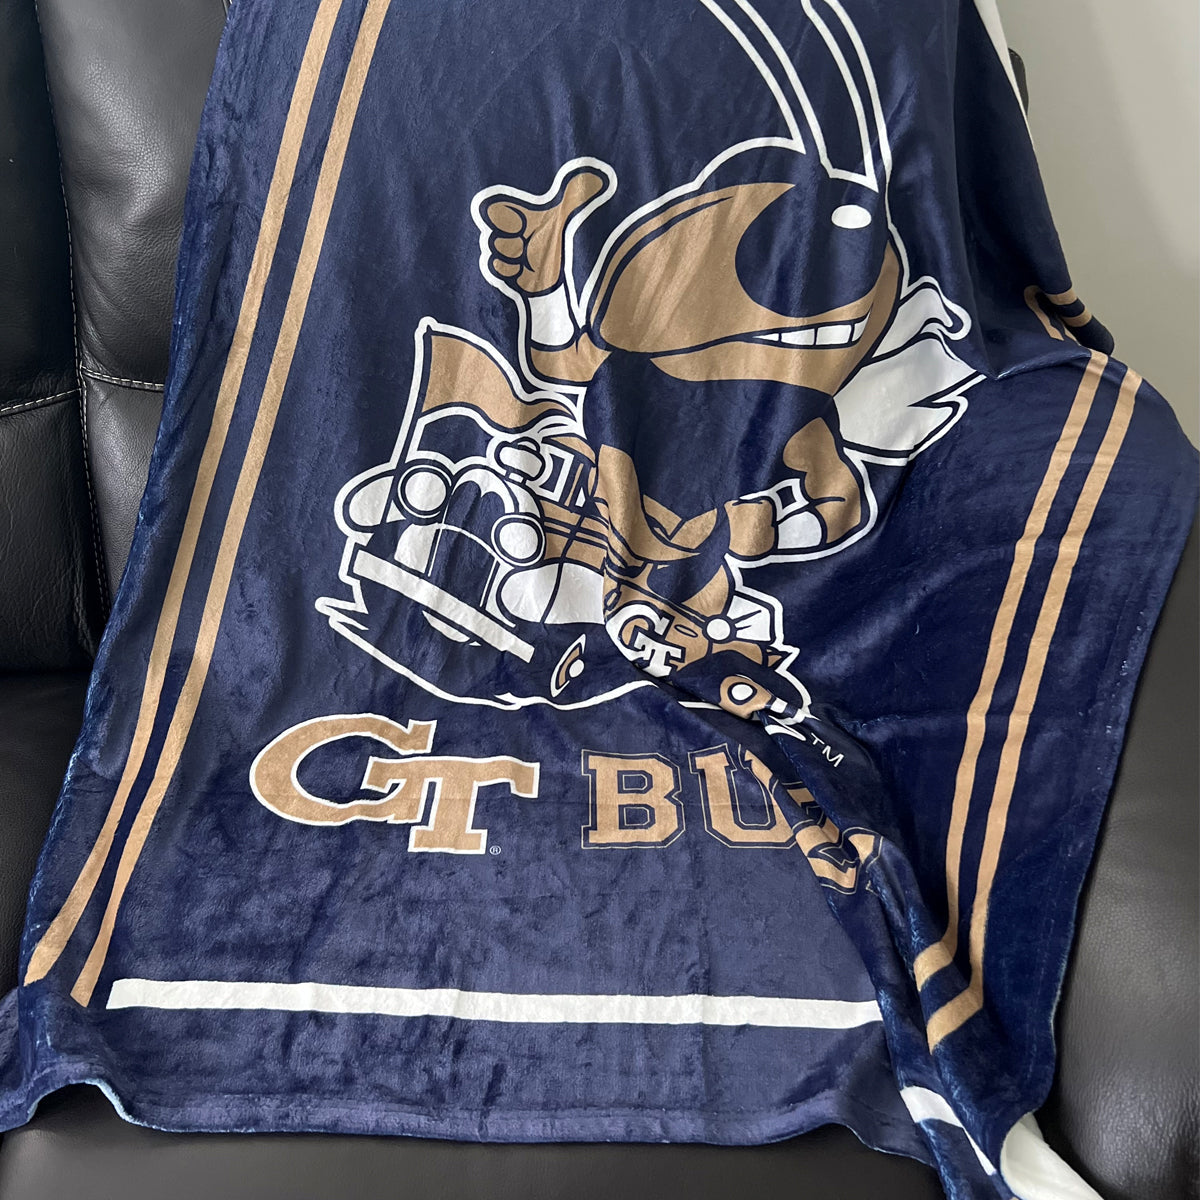 Coastal Carolina Chanticleers CCU Kids Game Day Teal Plush Soft Minky Blanket 36 x 48 Mascot